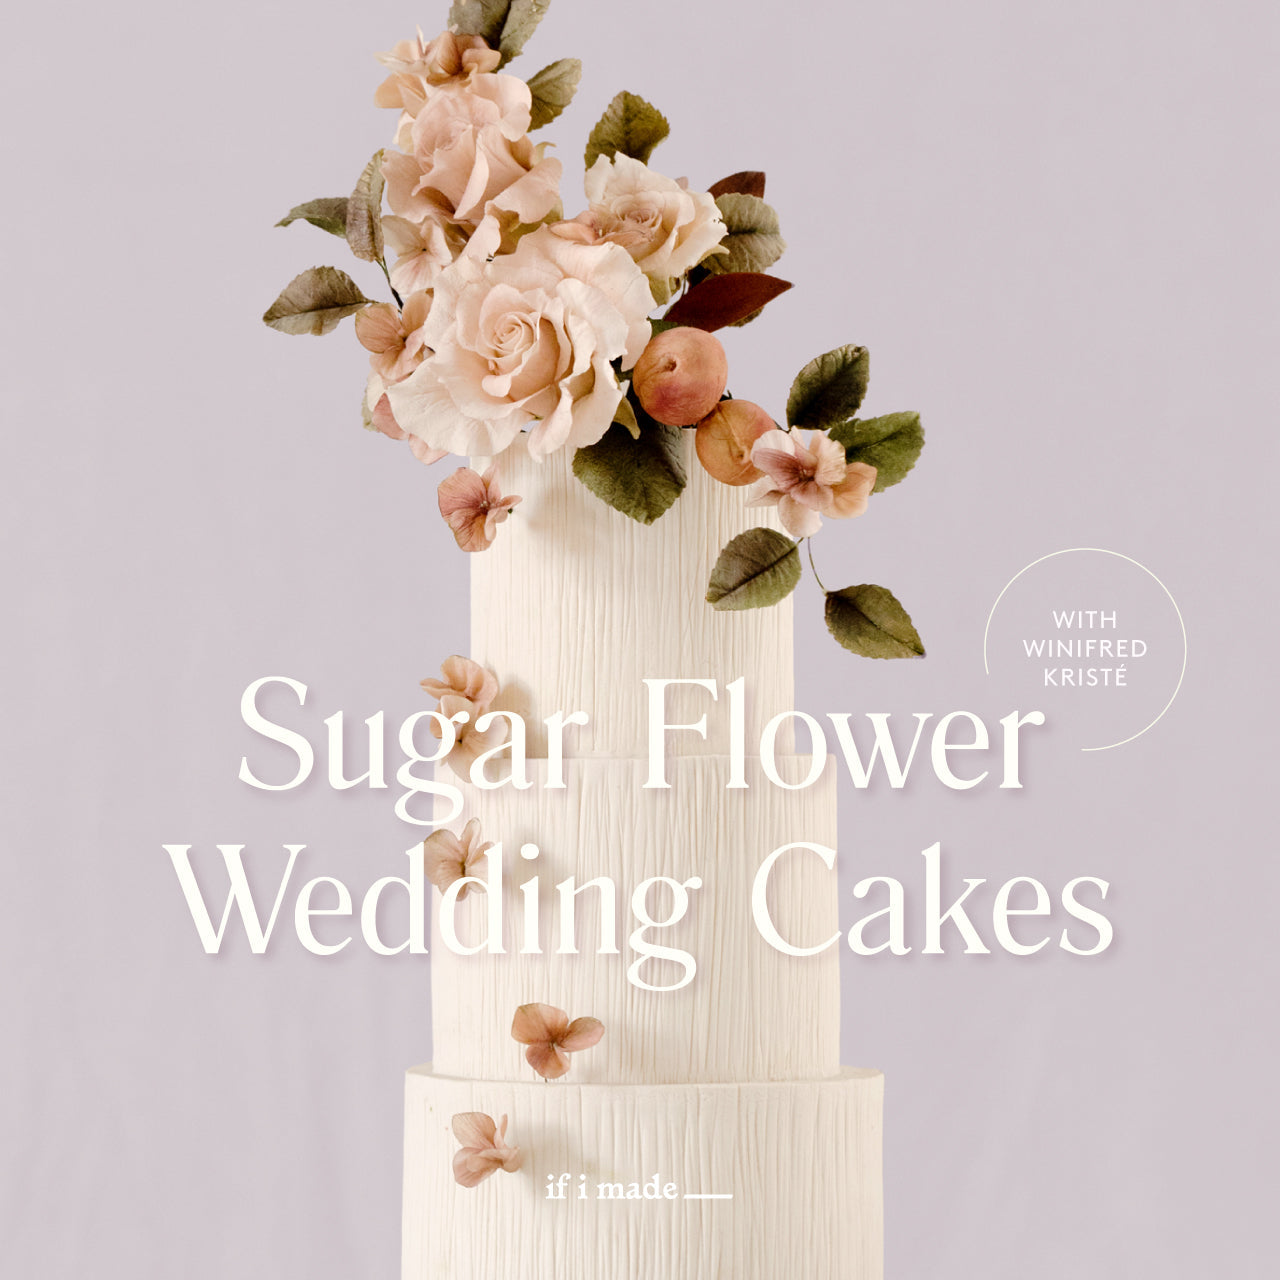 Sugar Flower Wedding Cakes with Winifred Kriste (SOP)